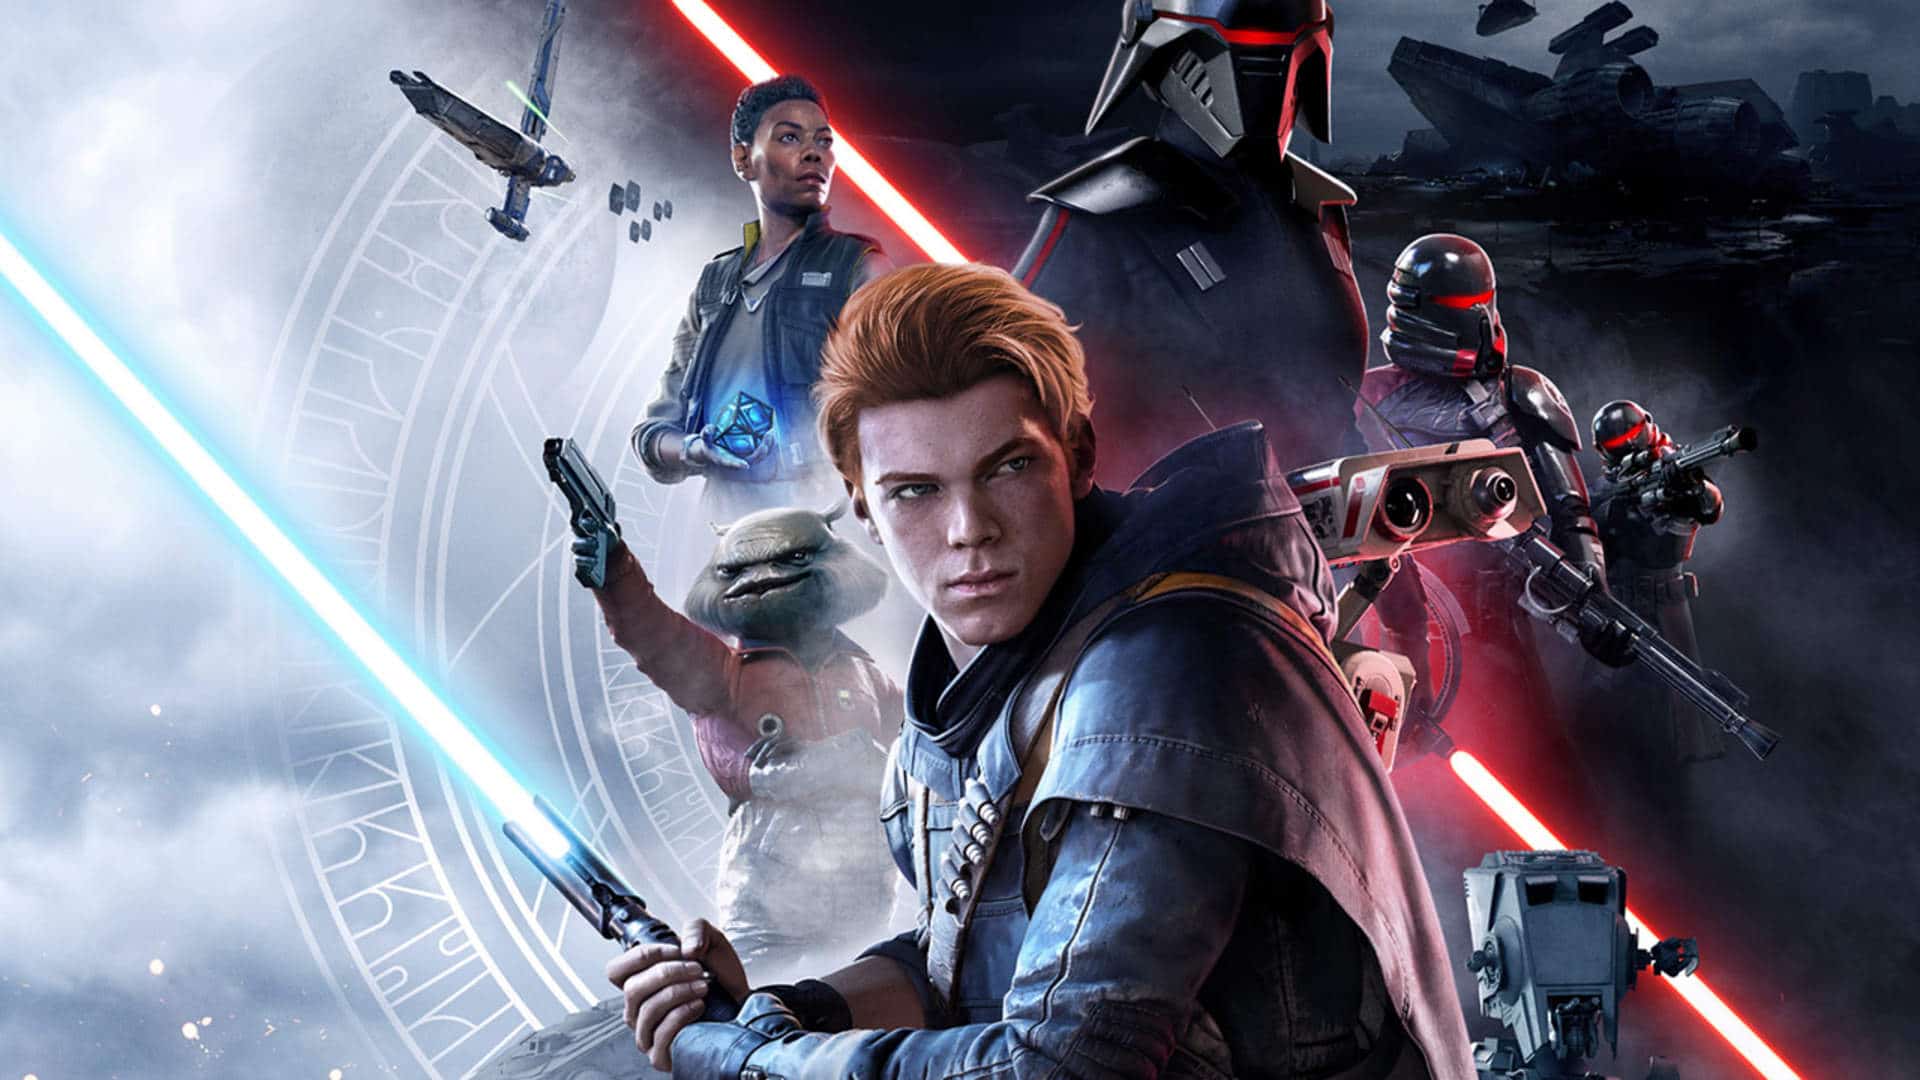 Star Wars Jedi: Fallen Order Cover Art